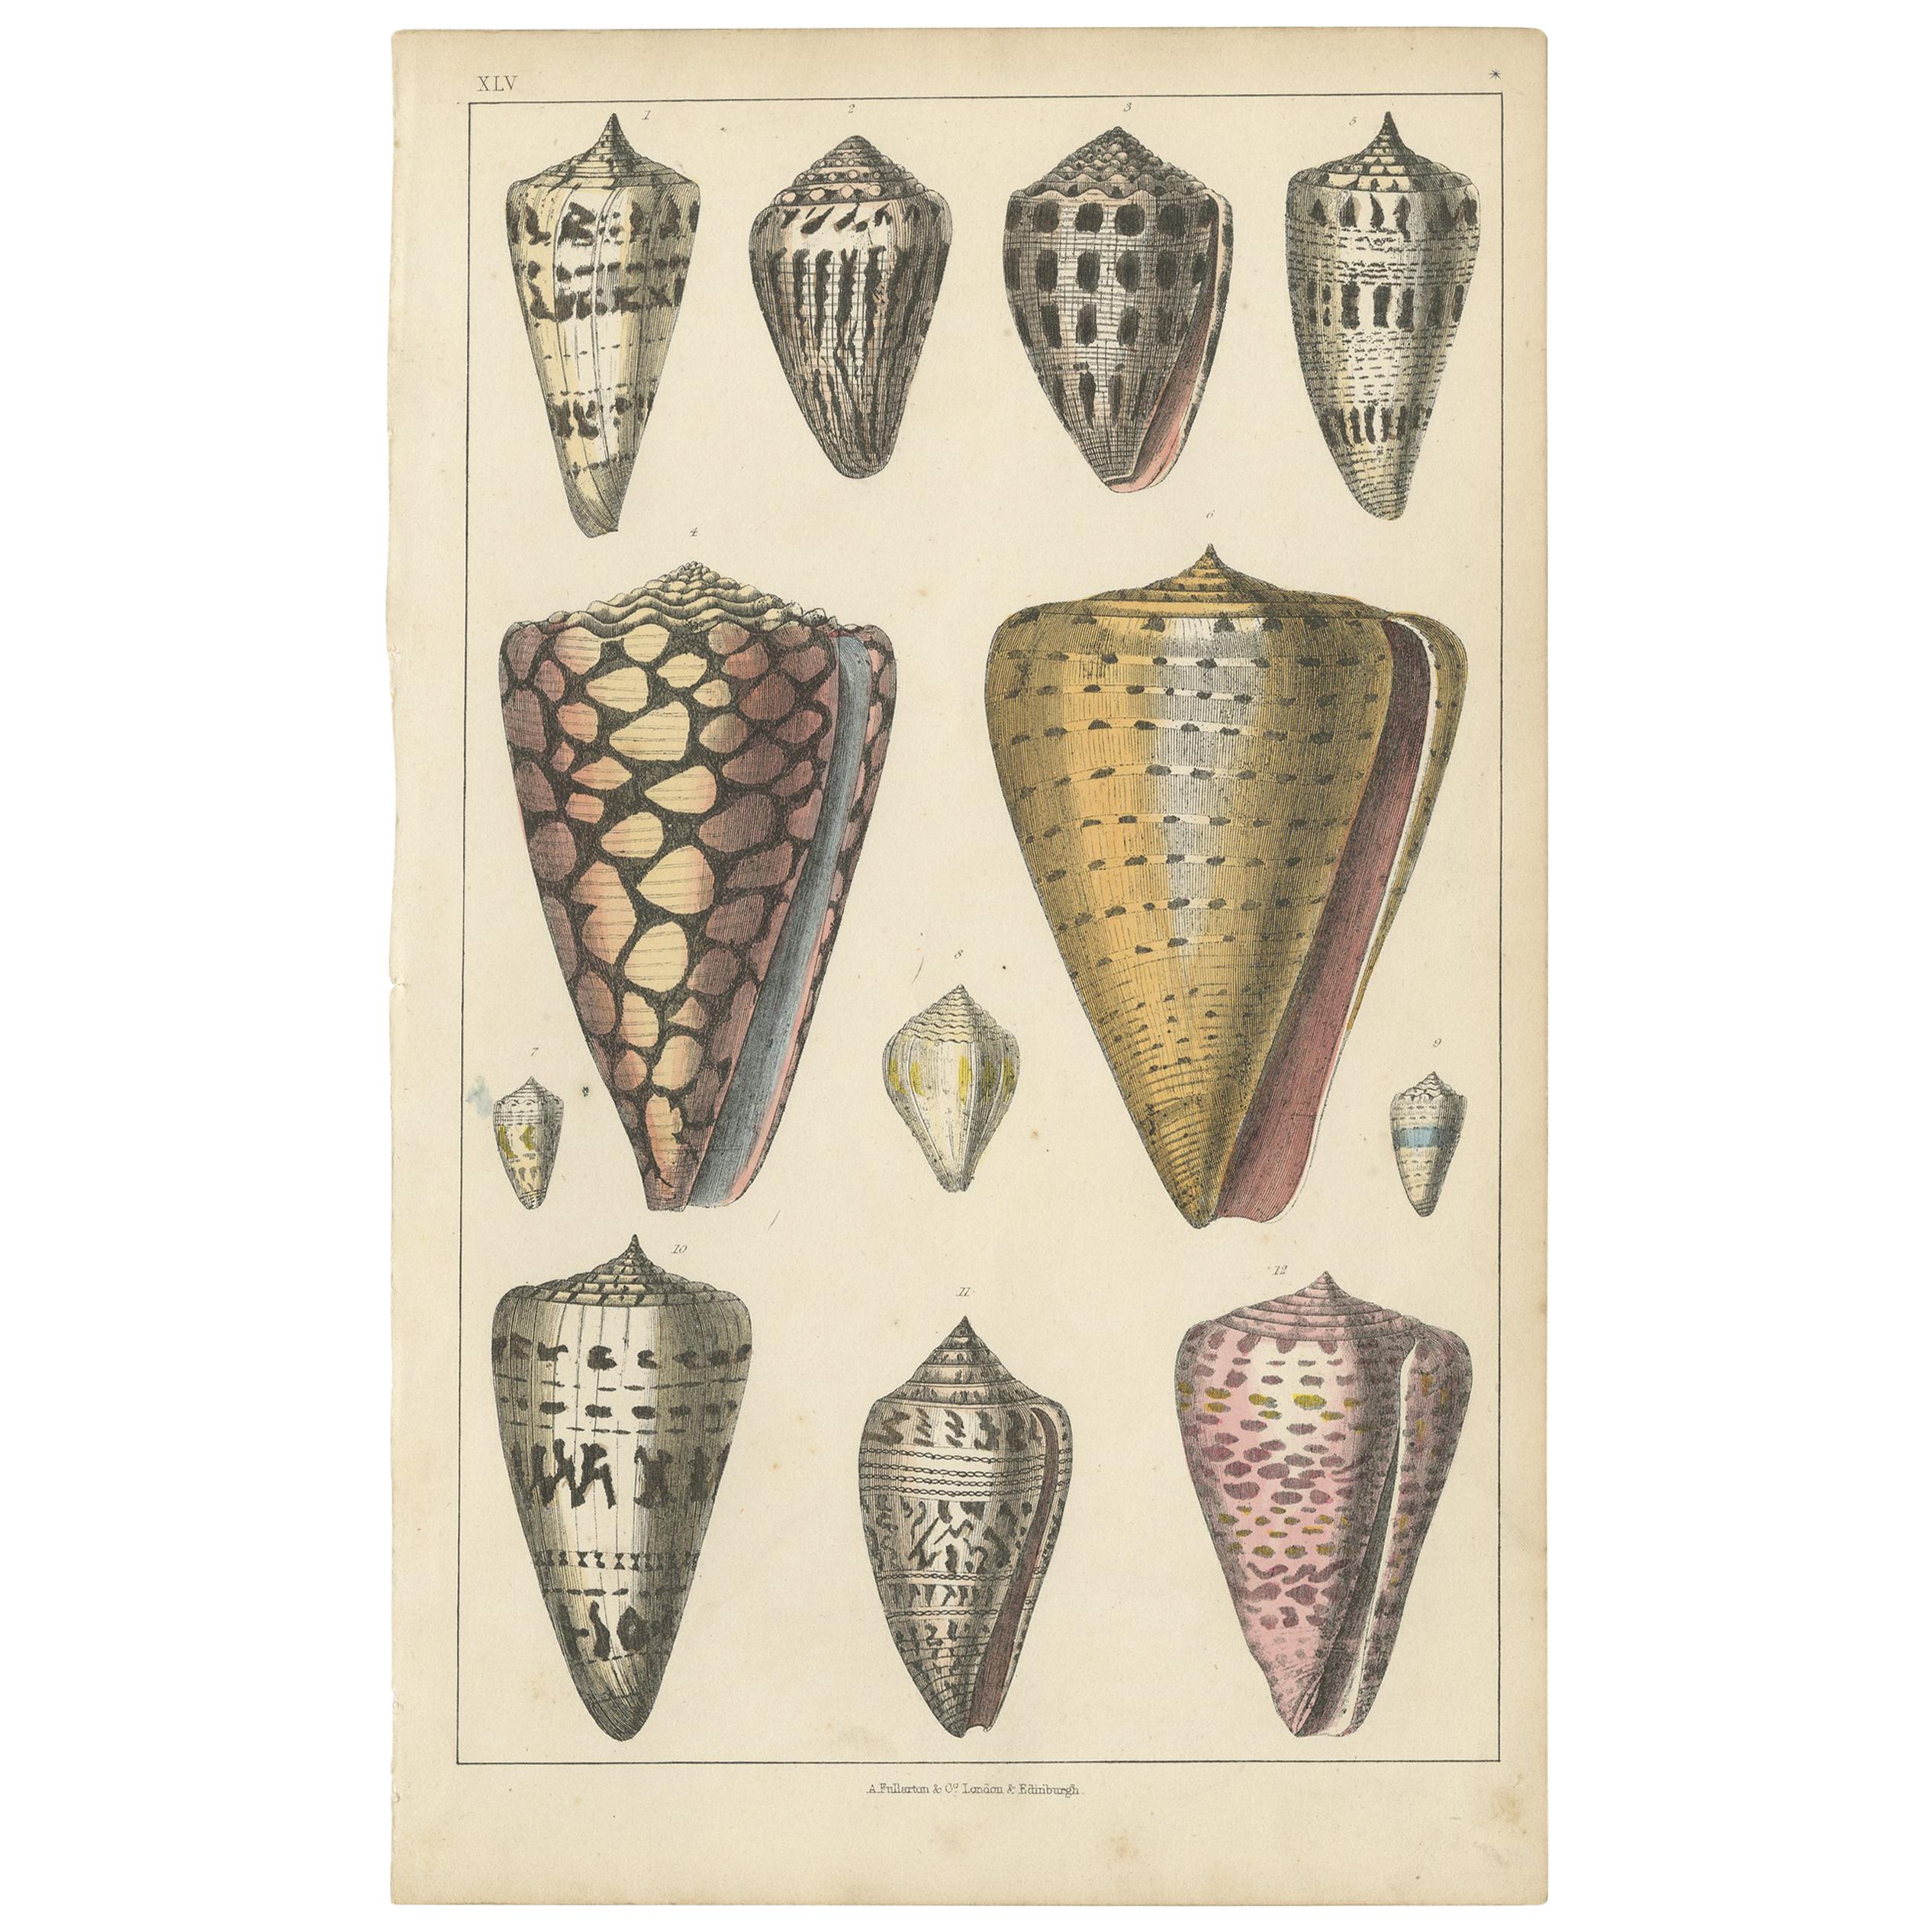 Antique Print of Shells by Fullarton, circa 1850